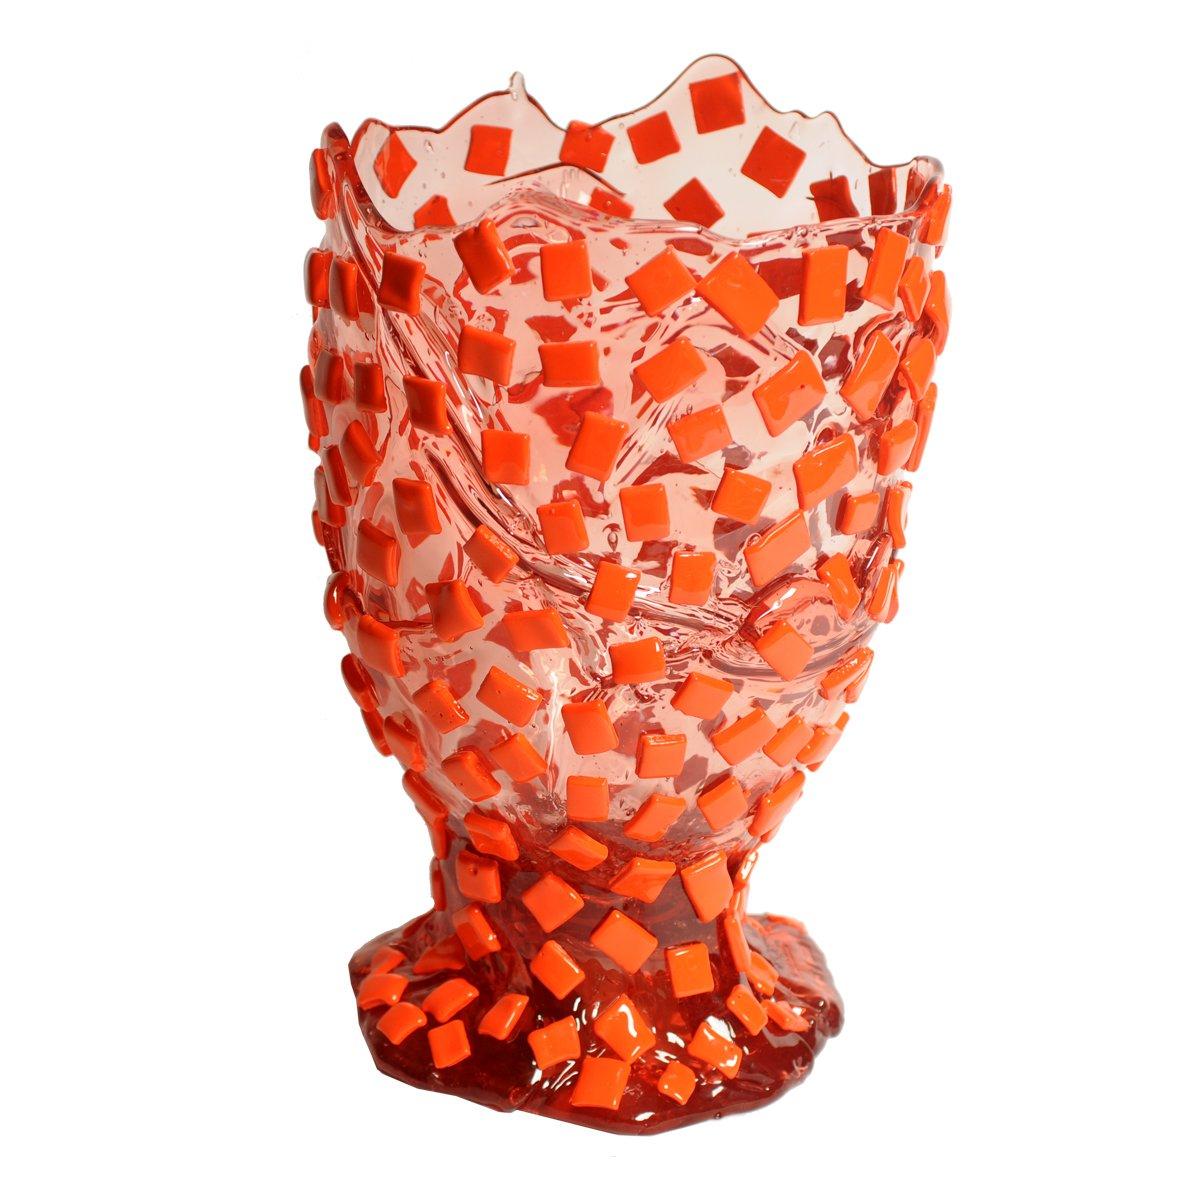 Rock vase - clear antique pink and Matt orange

Vase in soft resin designed by Gaetano Pesce in 1995 for Fish Design collection.

Measures: L - Ø 22cm x H 36cm

Dimensions available:
S - ø 10.5cm x H 19cm
M - ø 16cm x H 26cm
L - ø 22cm x H